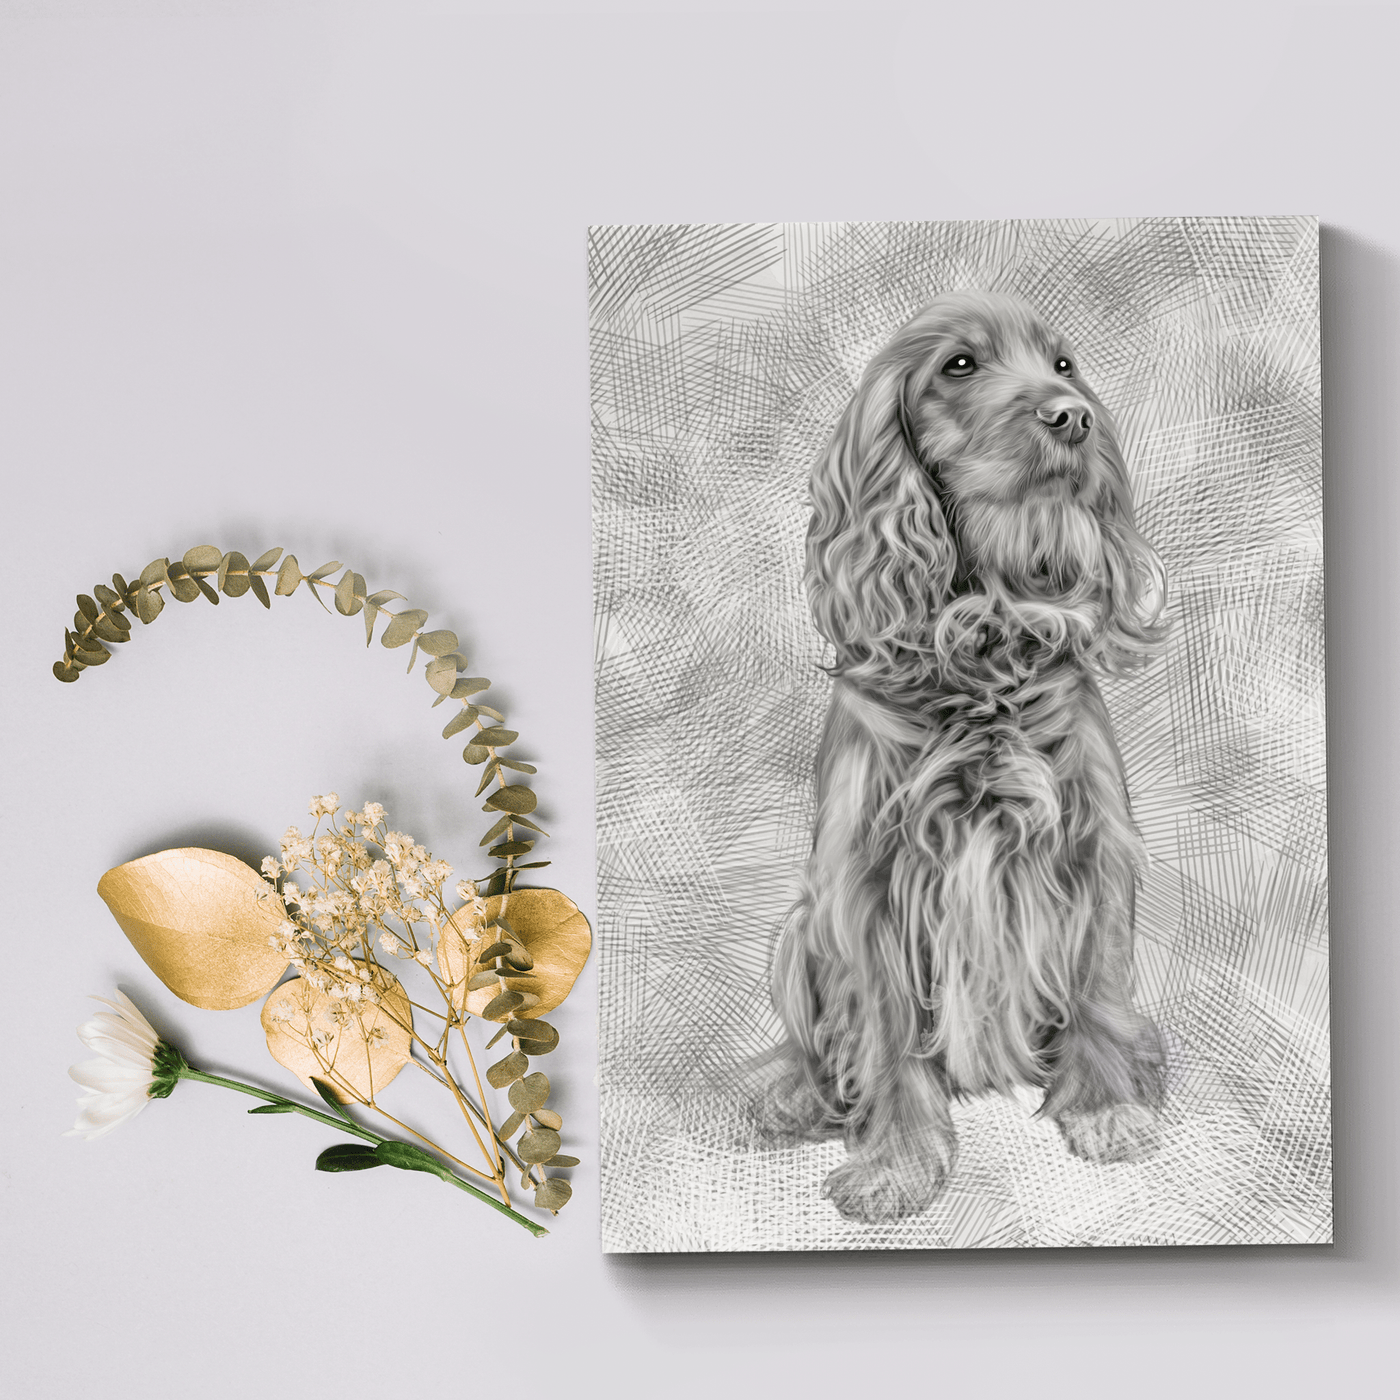 dog charcoal sketch of an adorable fur dog